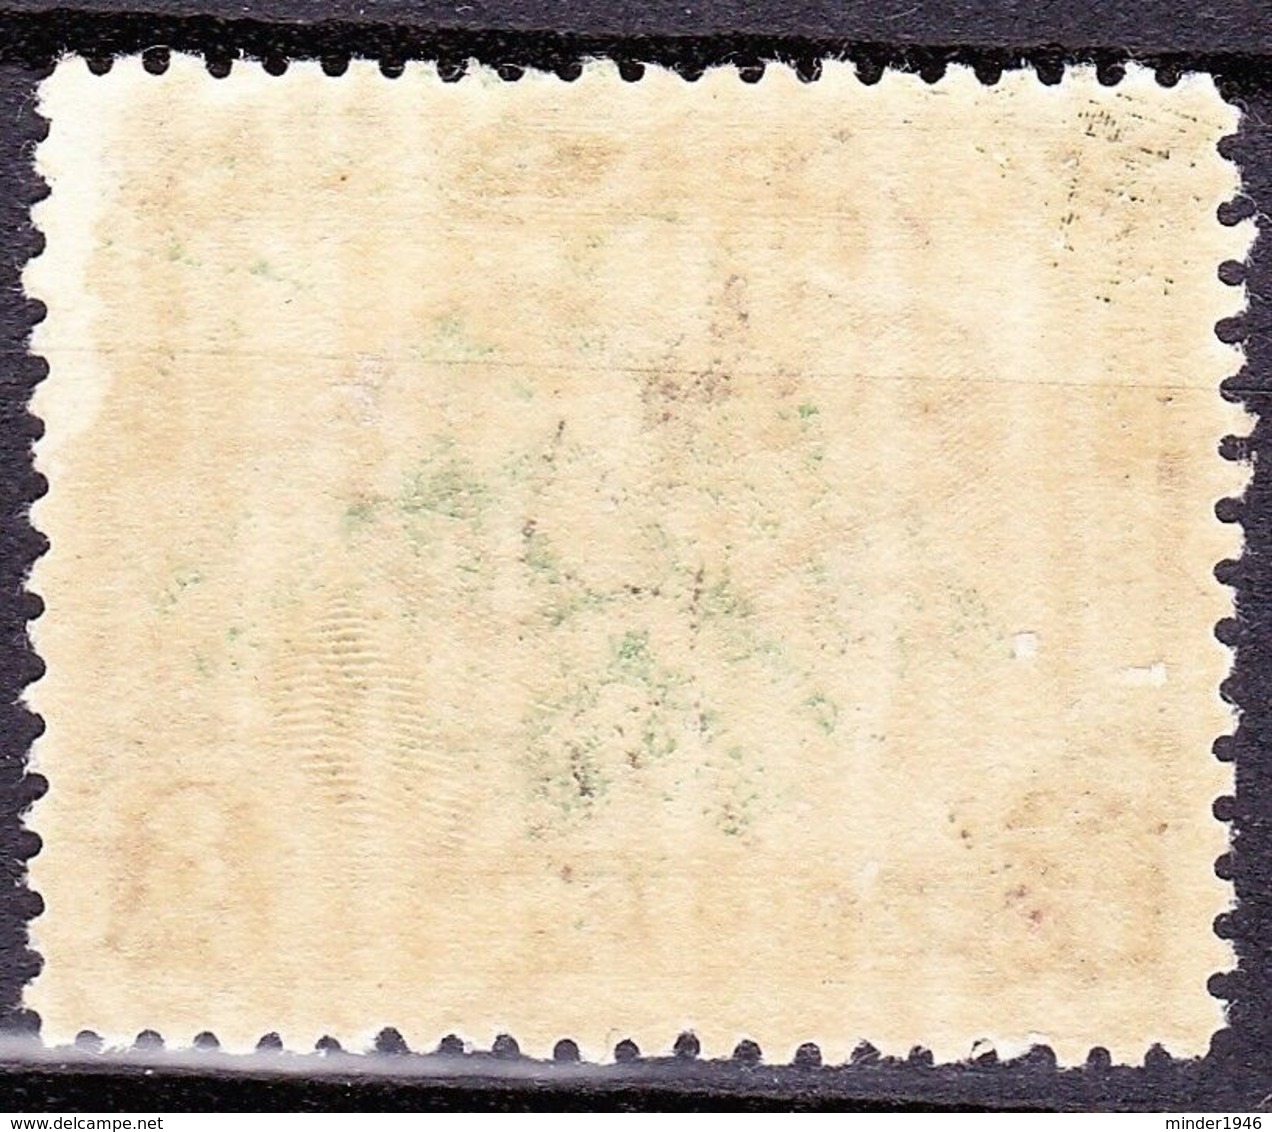 MALAYA JOHORE 1960 8c Myrtle Green SG159 Fine Used - Johore